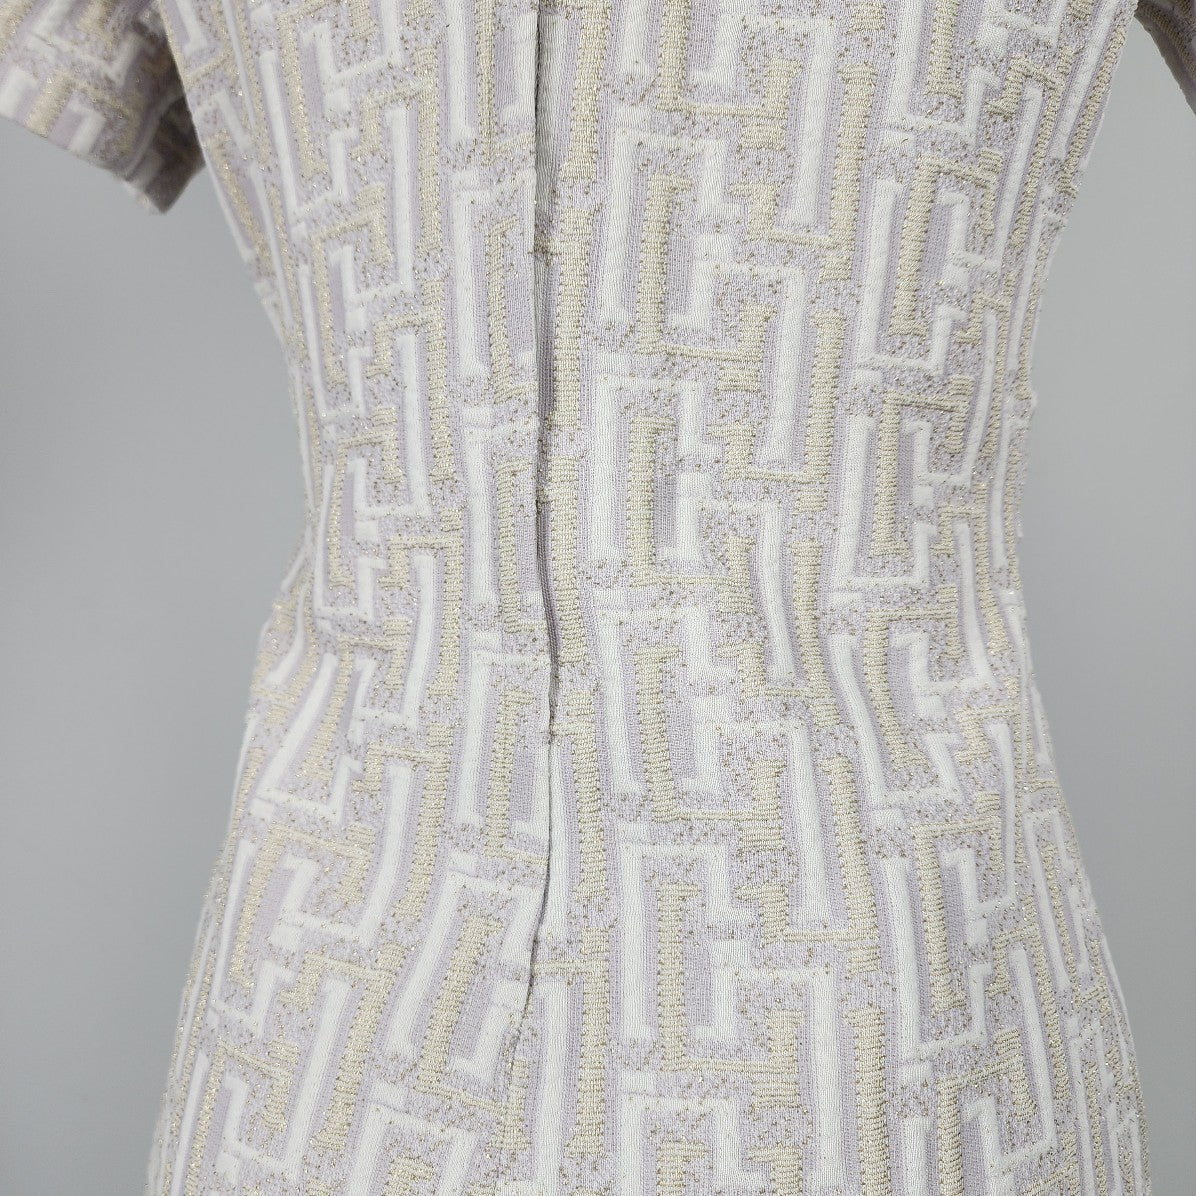 Vintage Grey & Gold Collared Short Sleeve Sheath Dress Size S/M